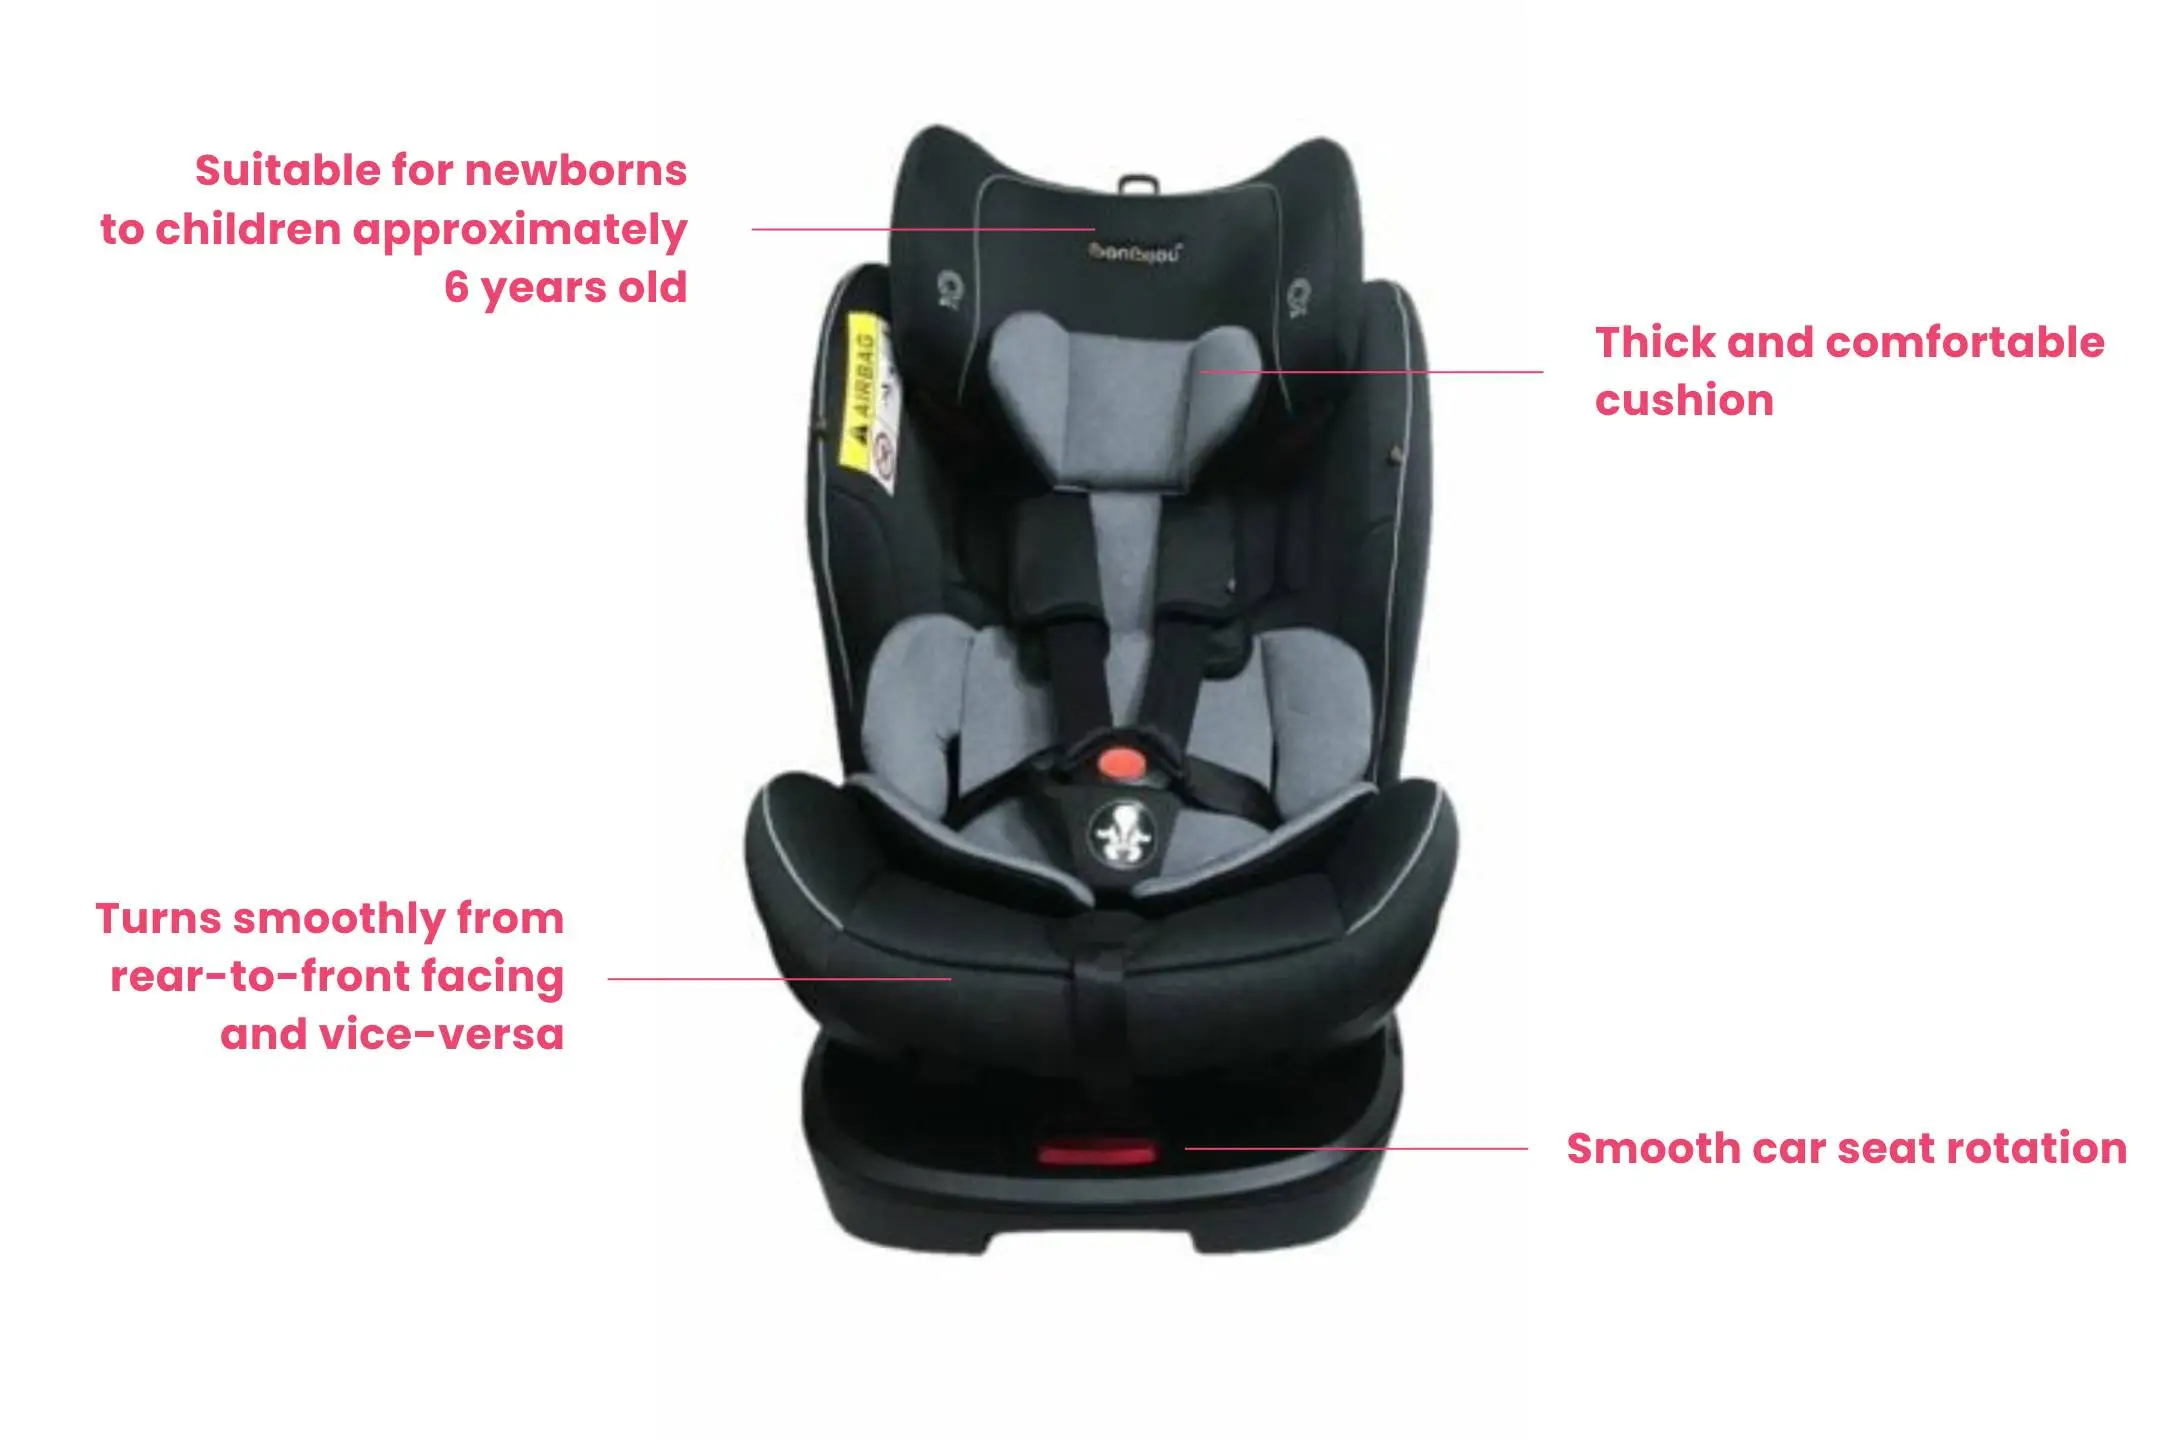 Bonbijou Orbit Car Seat features